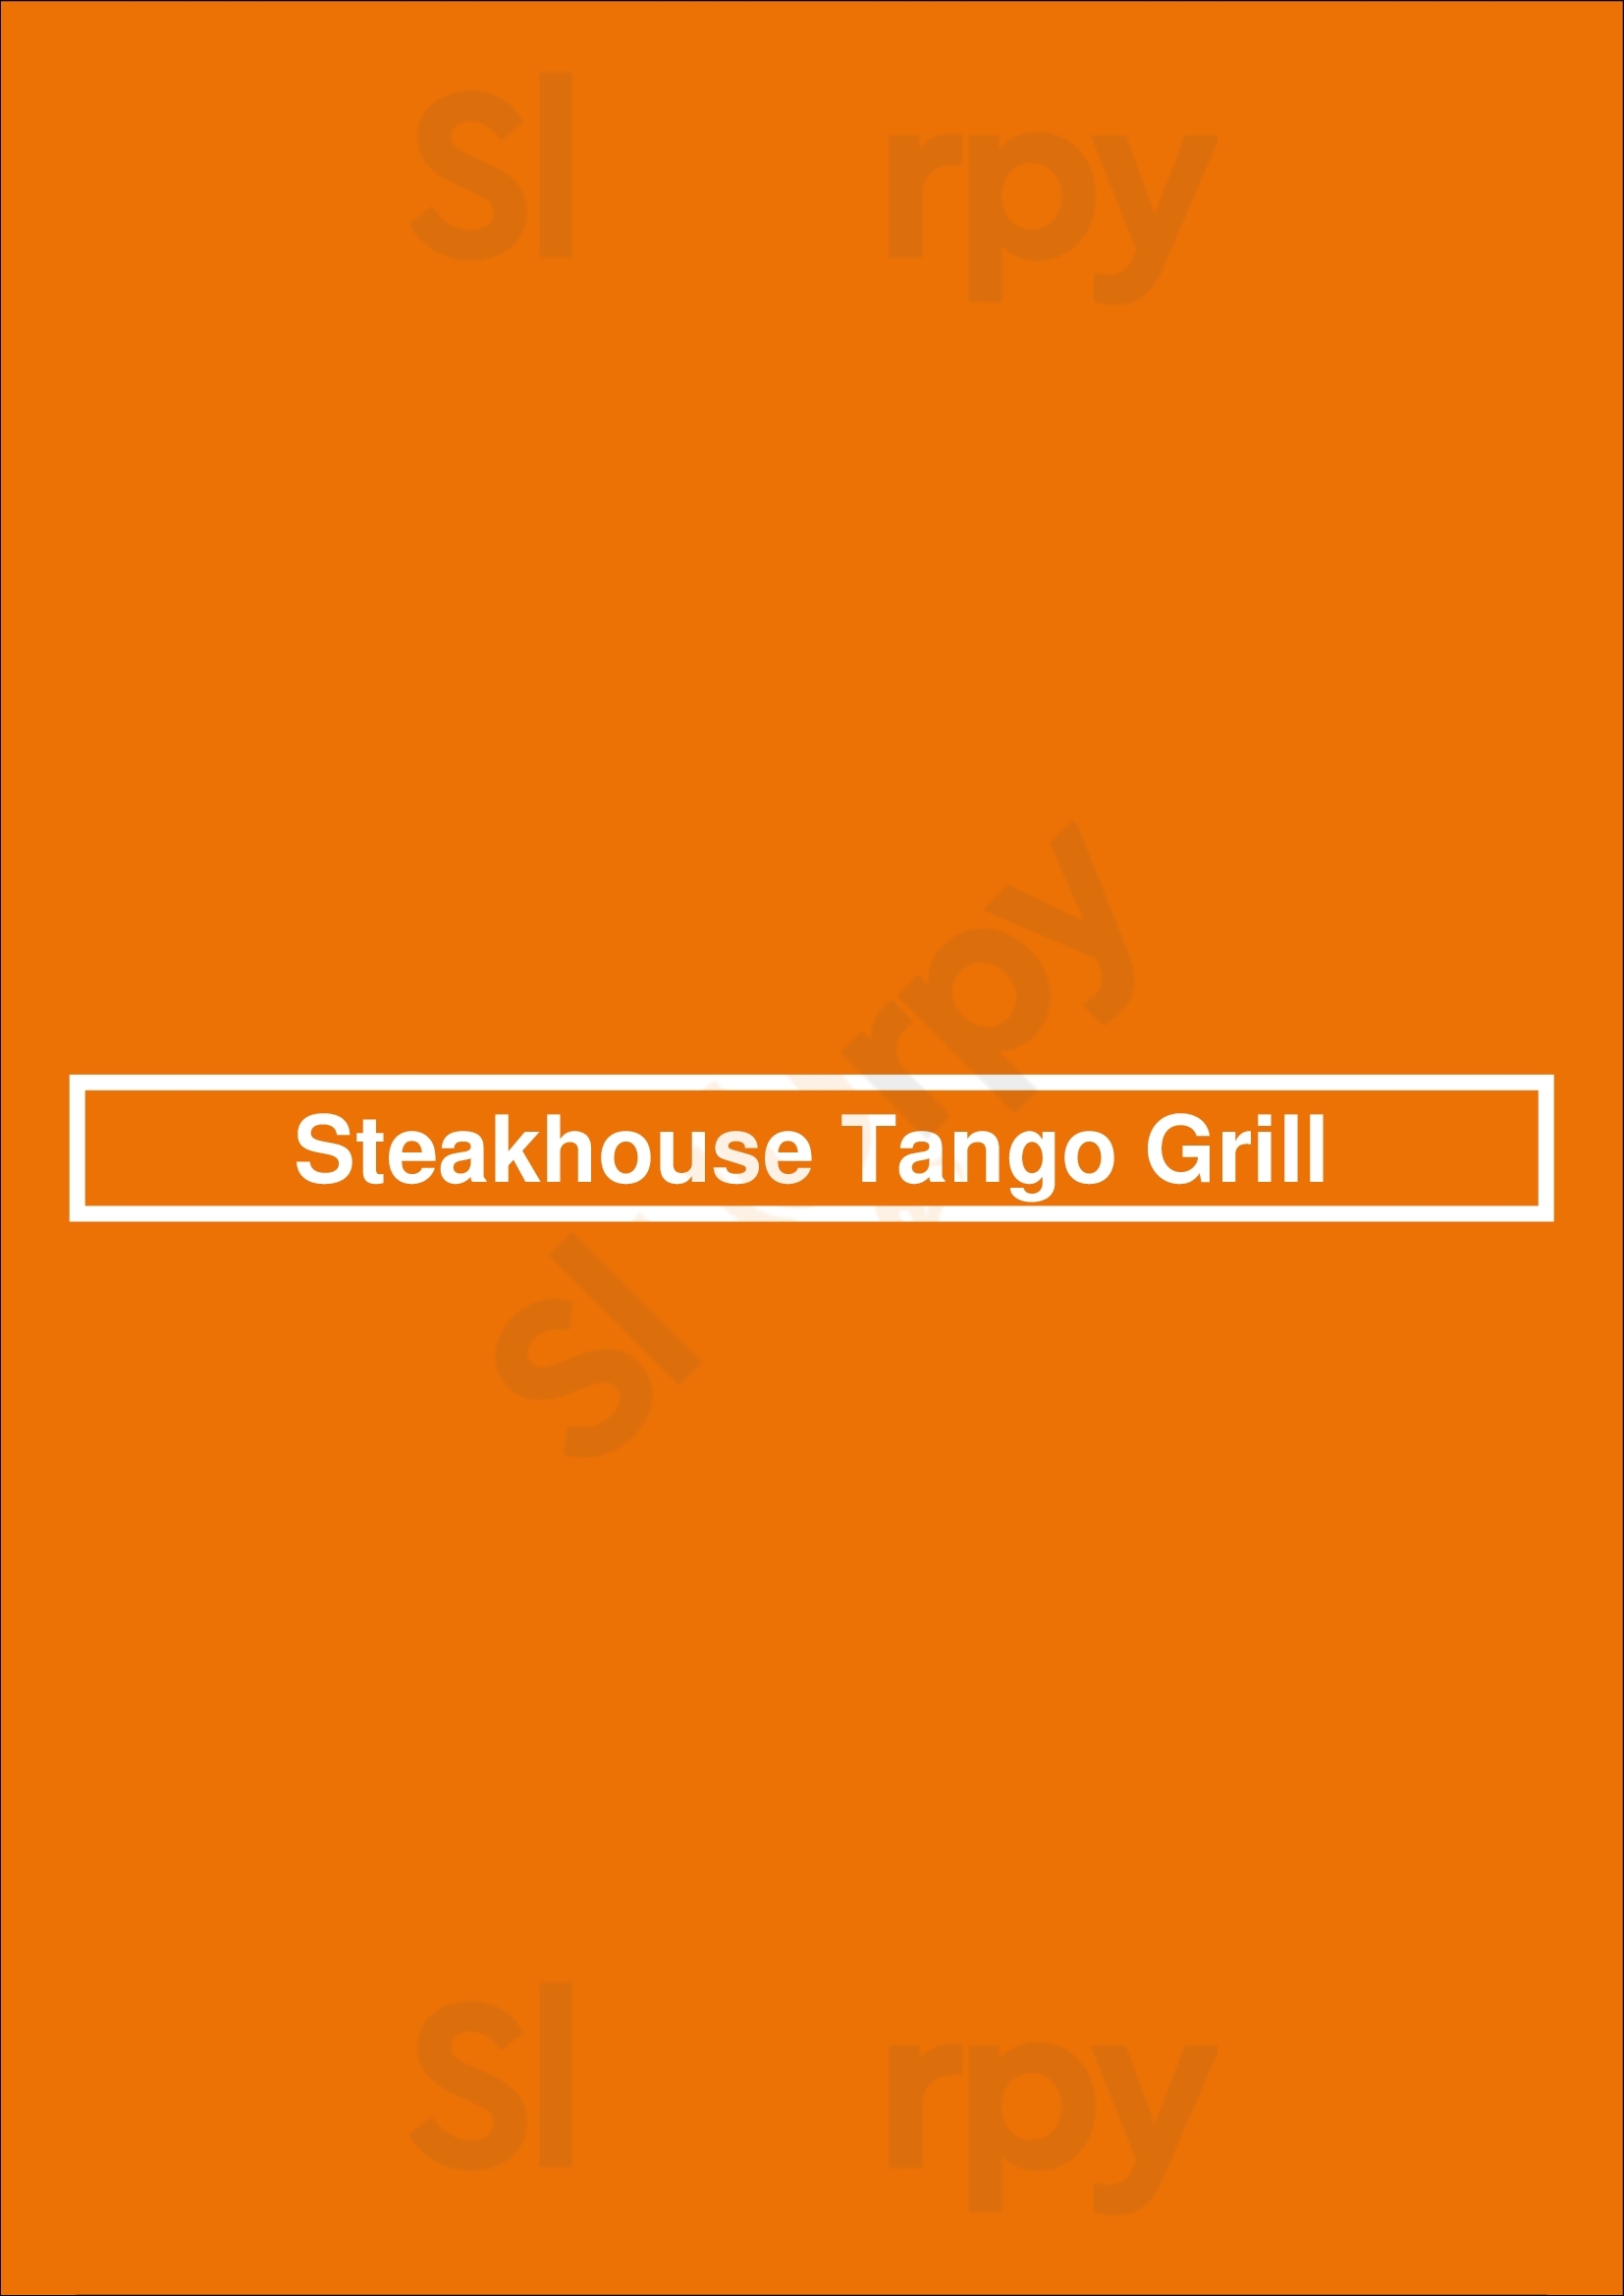 Steakhouse Tango Grill Amsterdam Menu - 1